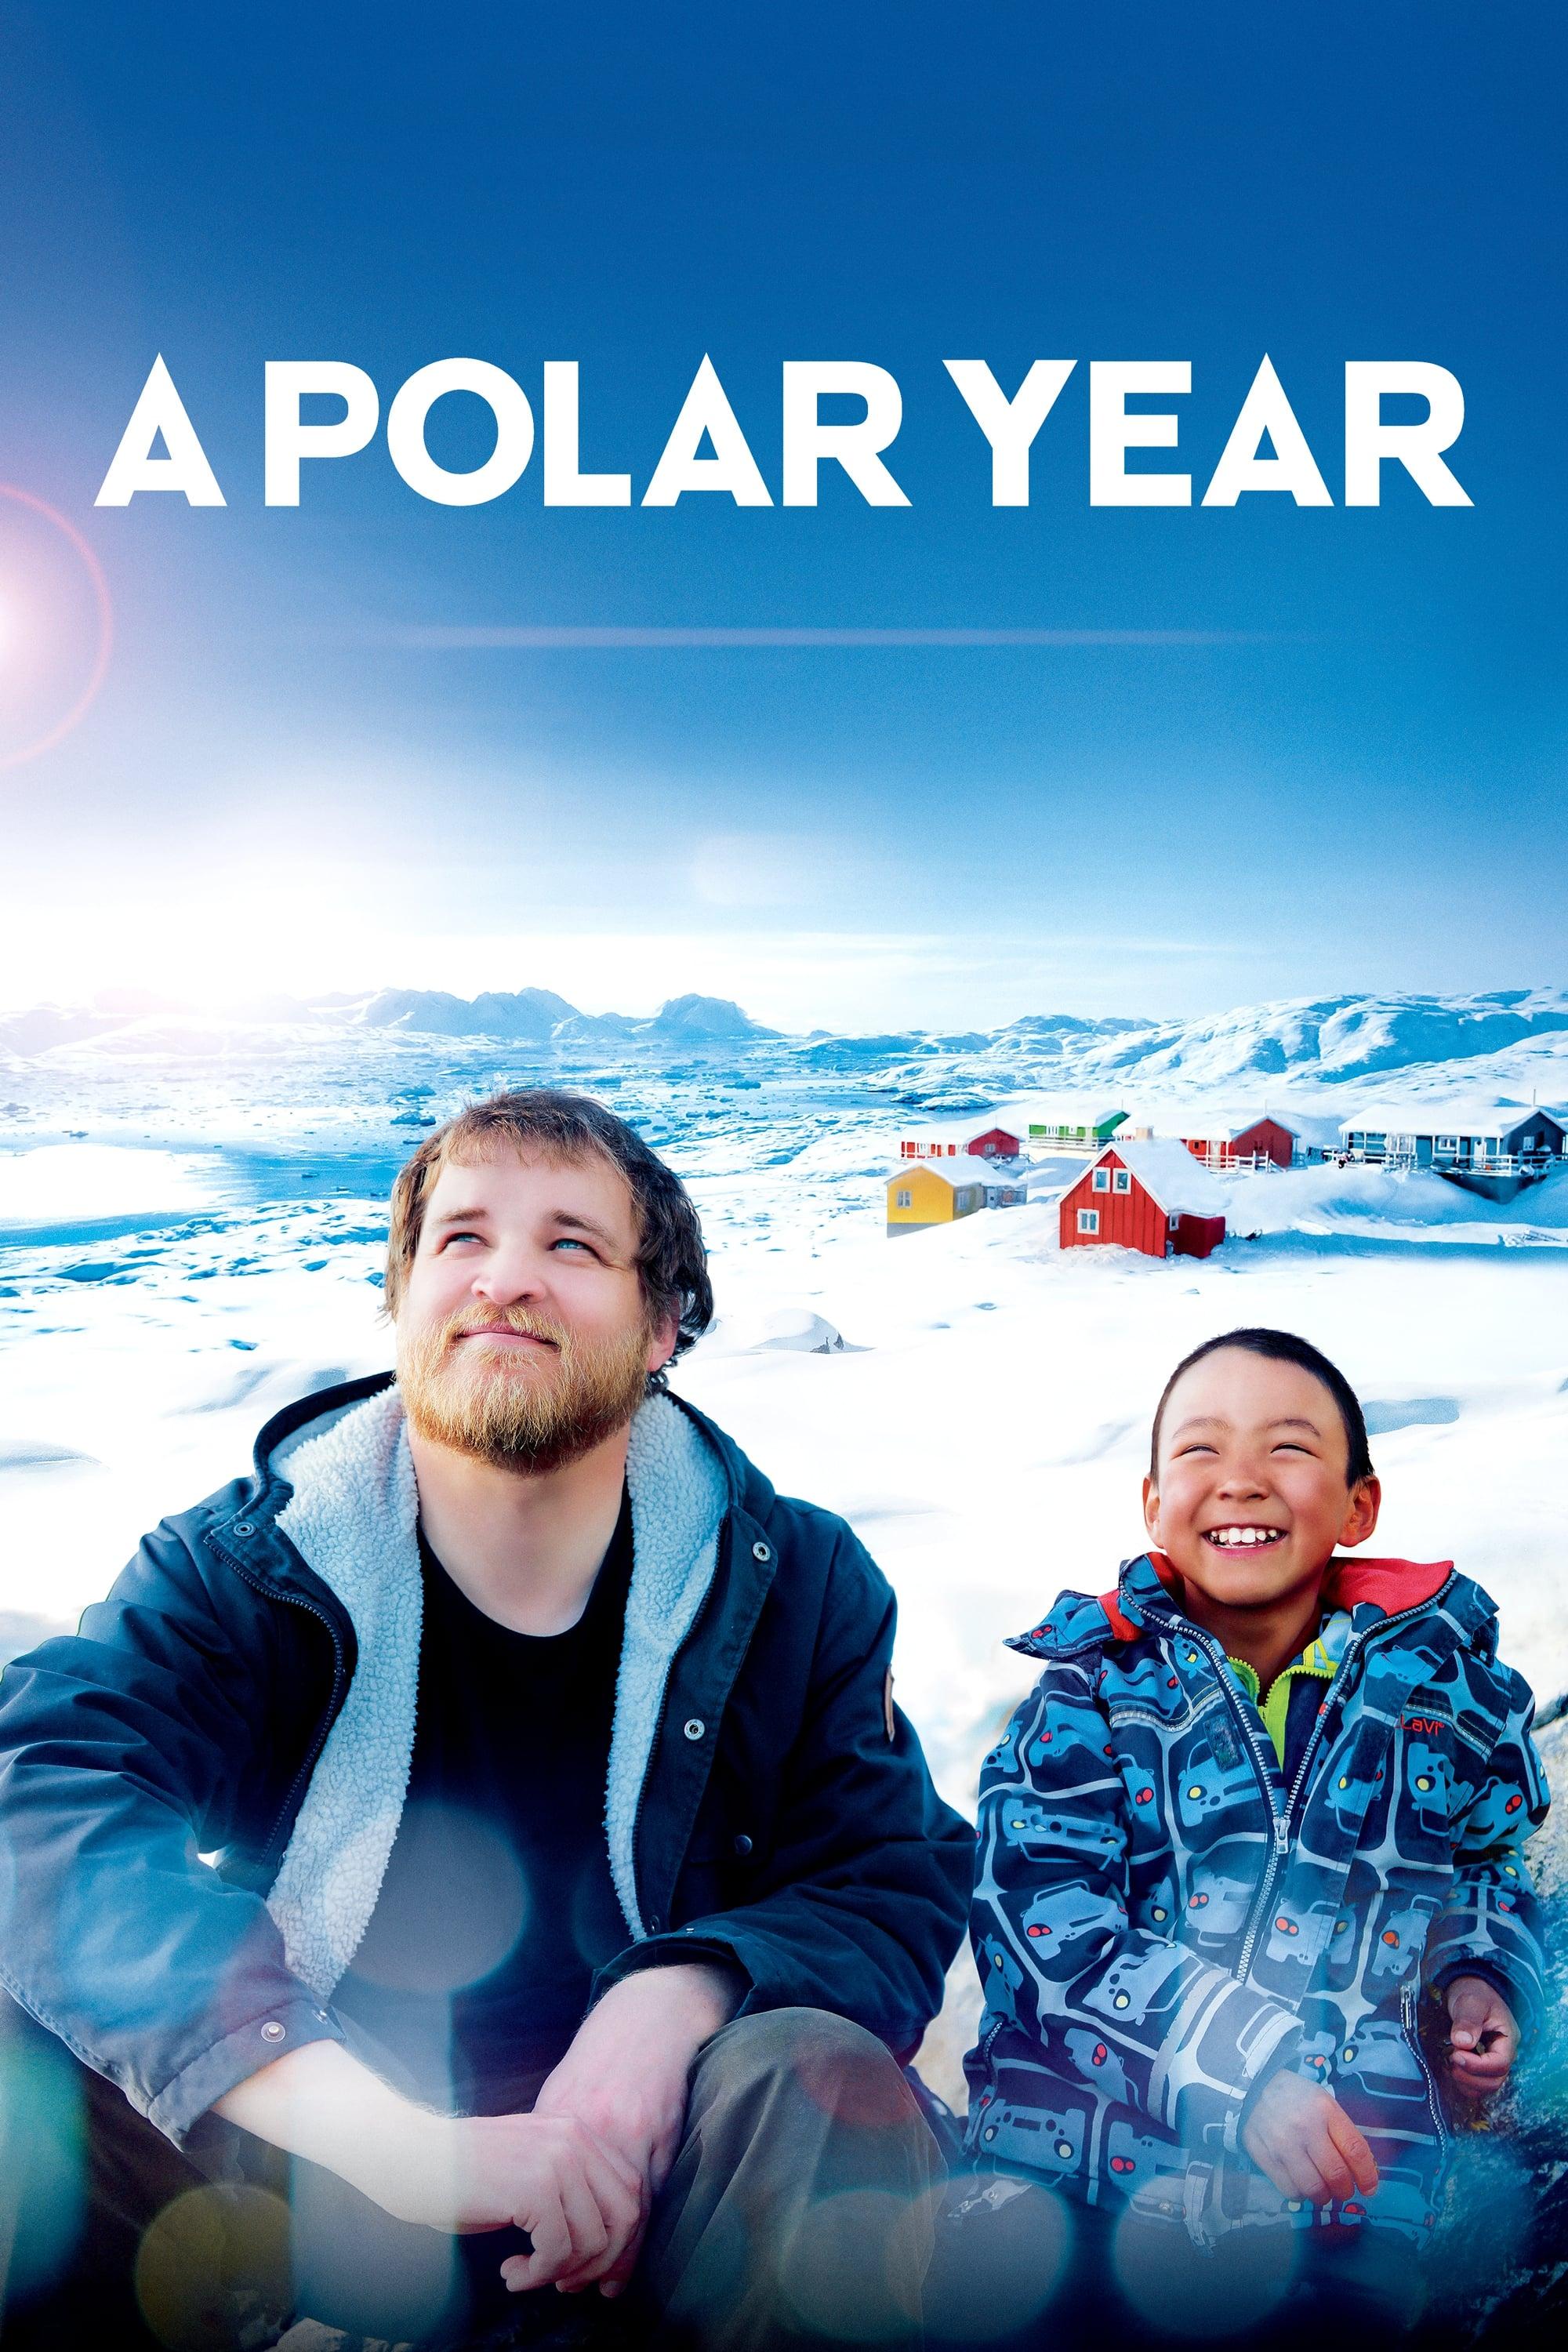 A Polar Year poster